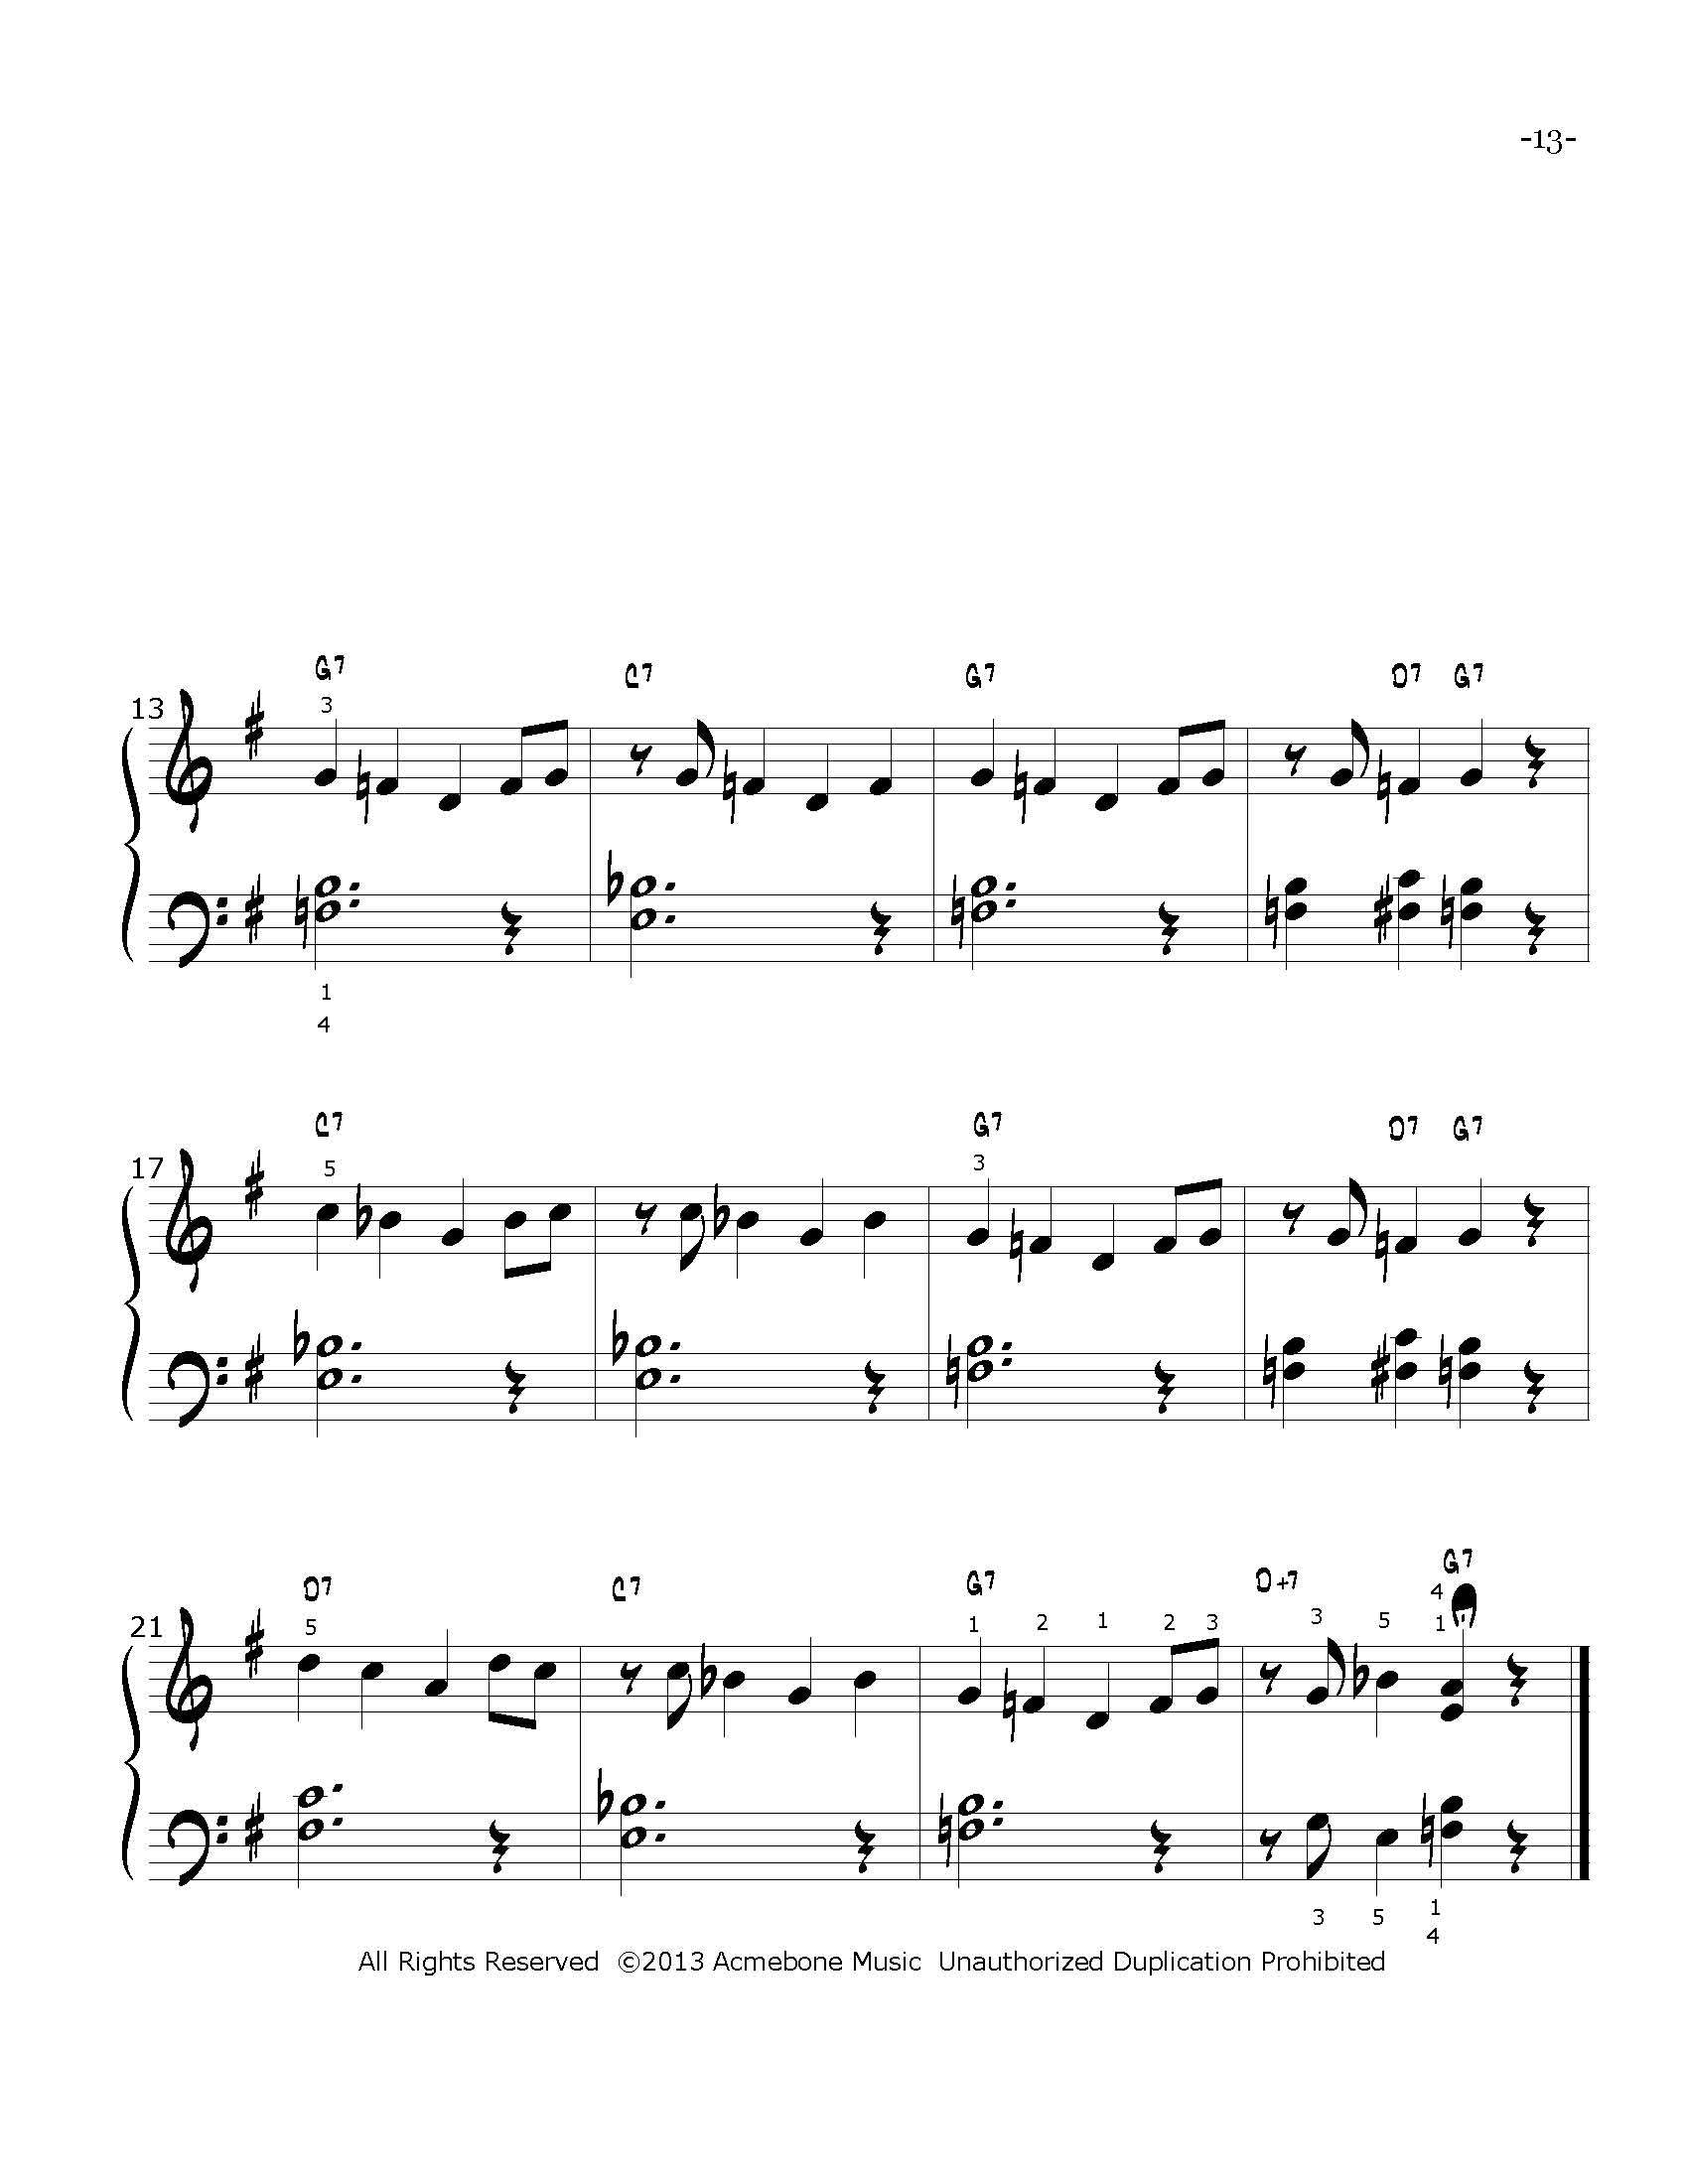 Progressive Jazz Etudes for Piano bk1 for web_Page_14.jpg